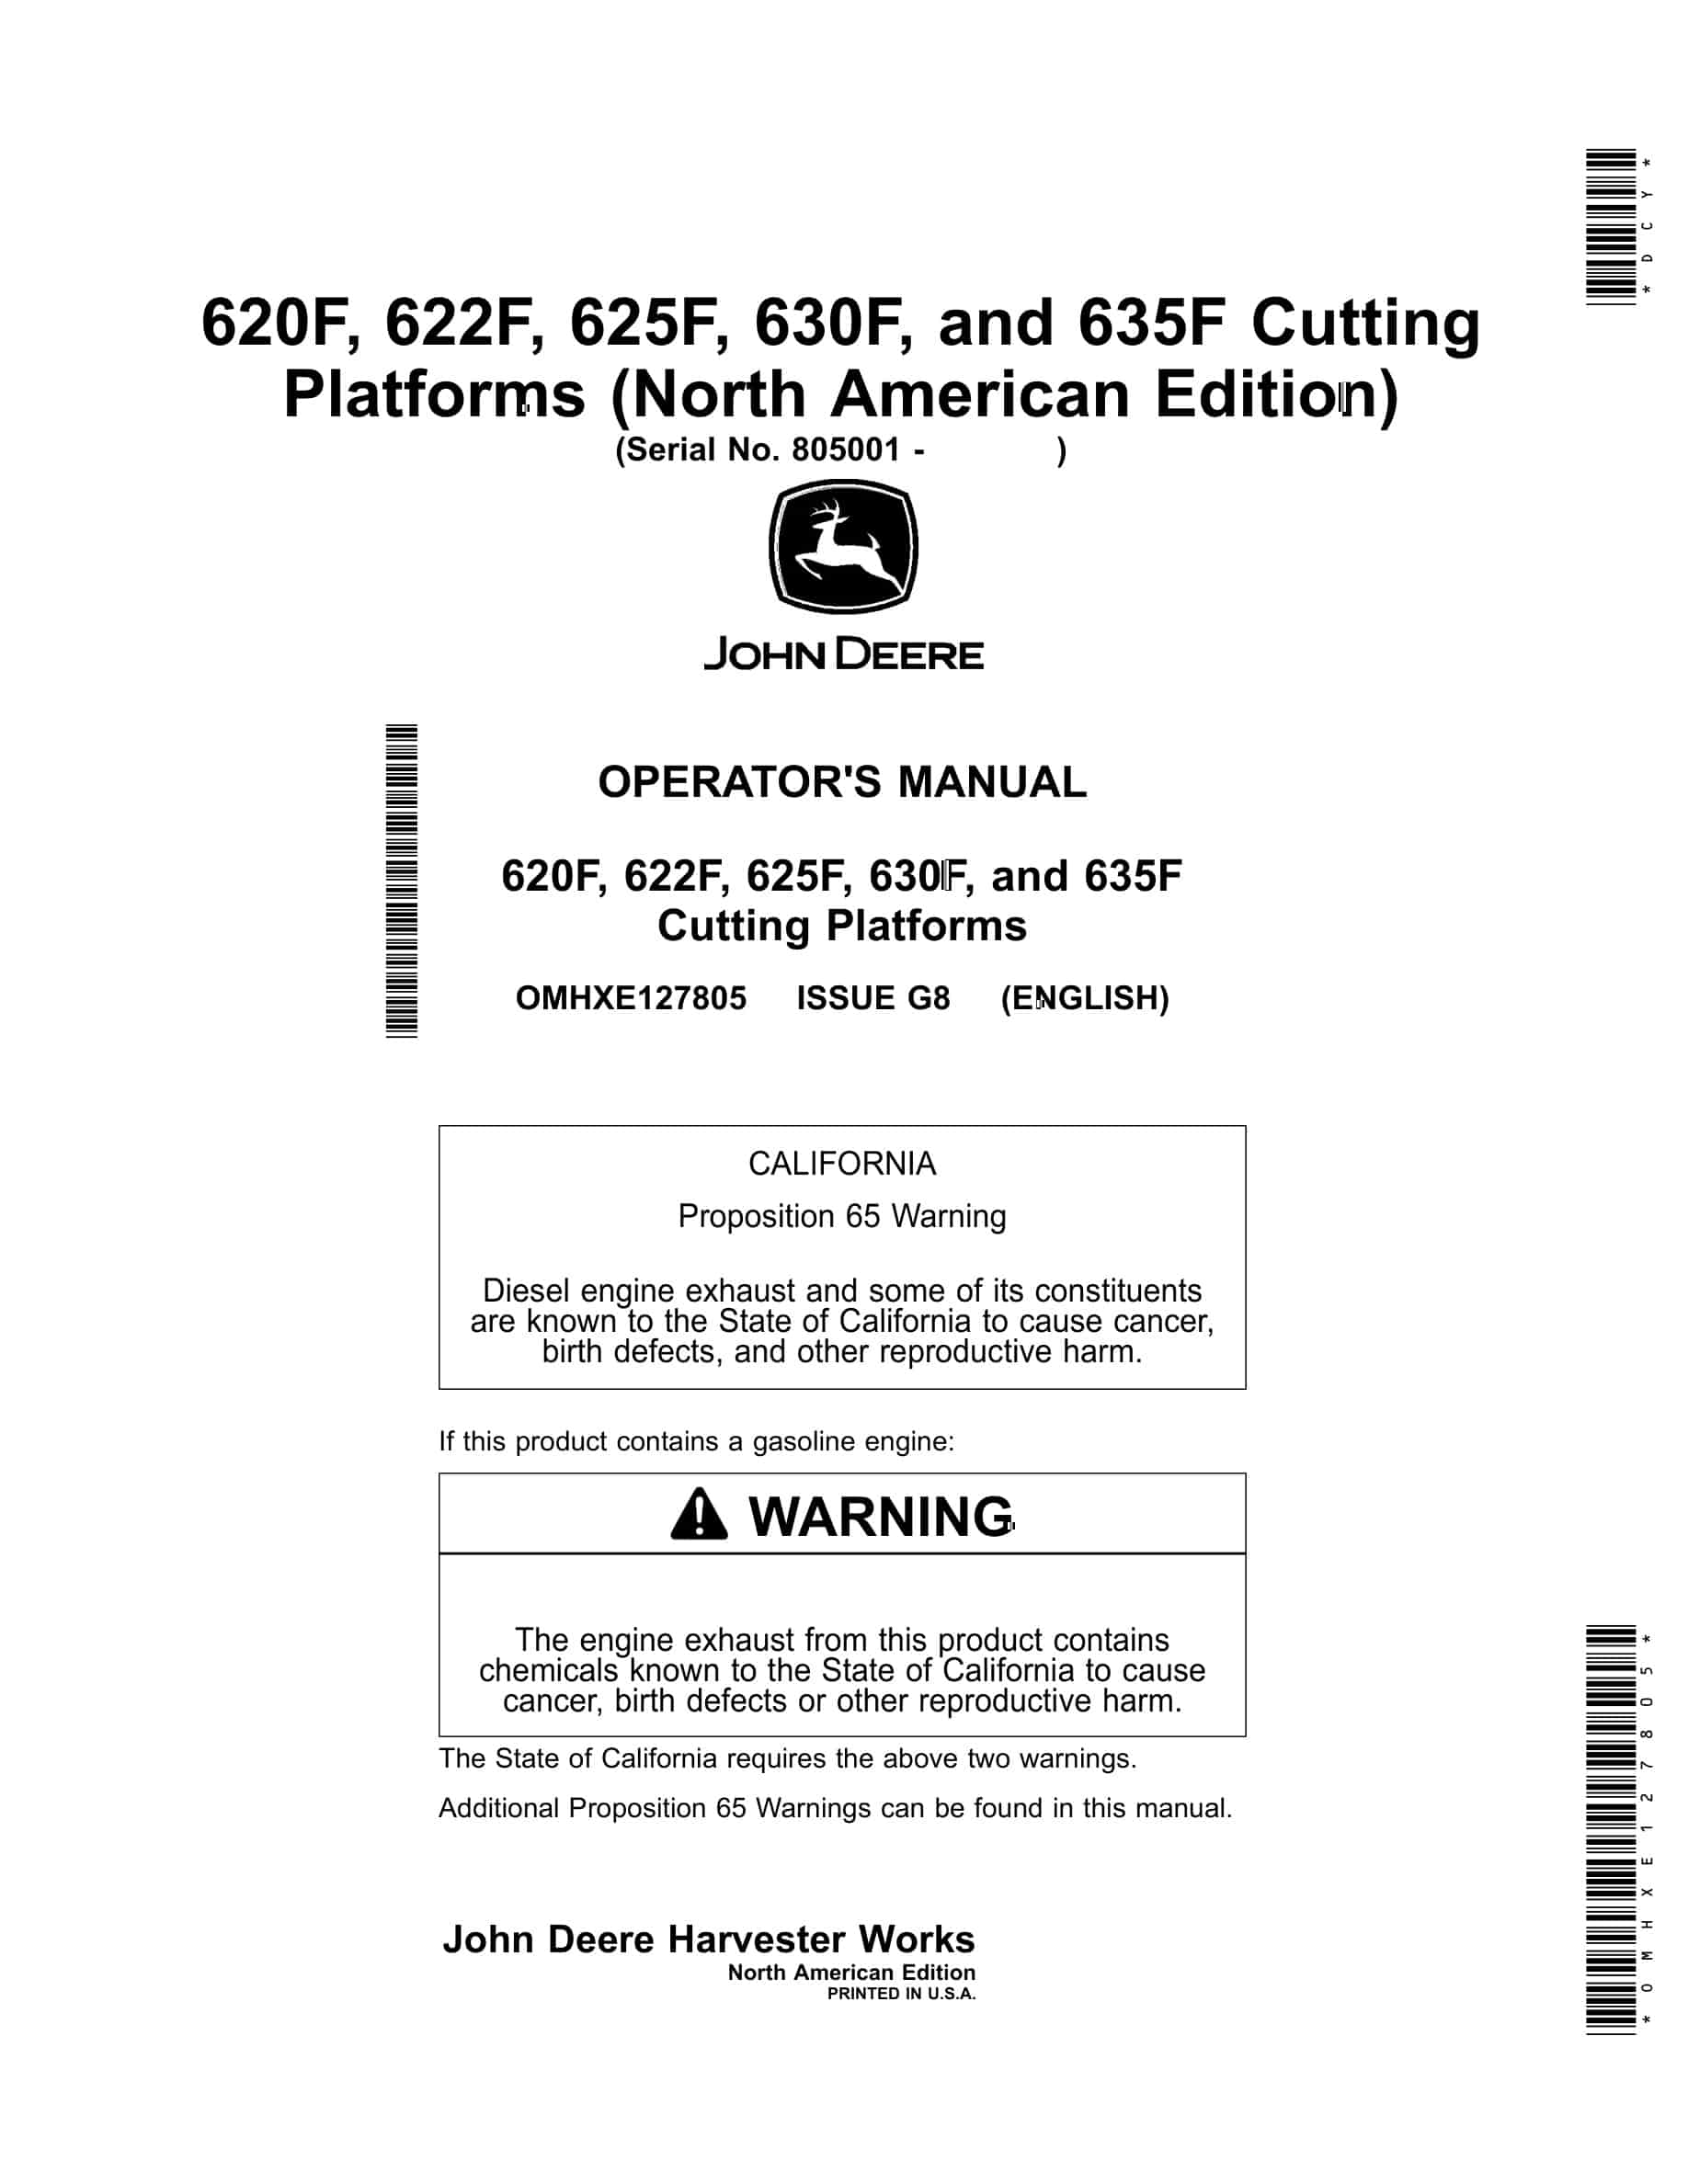 John Deere 620F, 622F, 625F, 630F, and 635F Cutting Platforms Operator Manual OMHXE127805-1